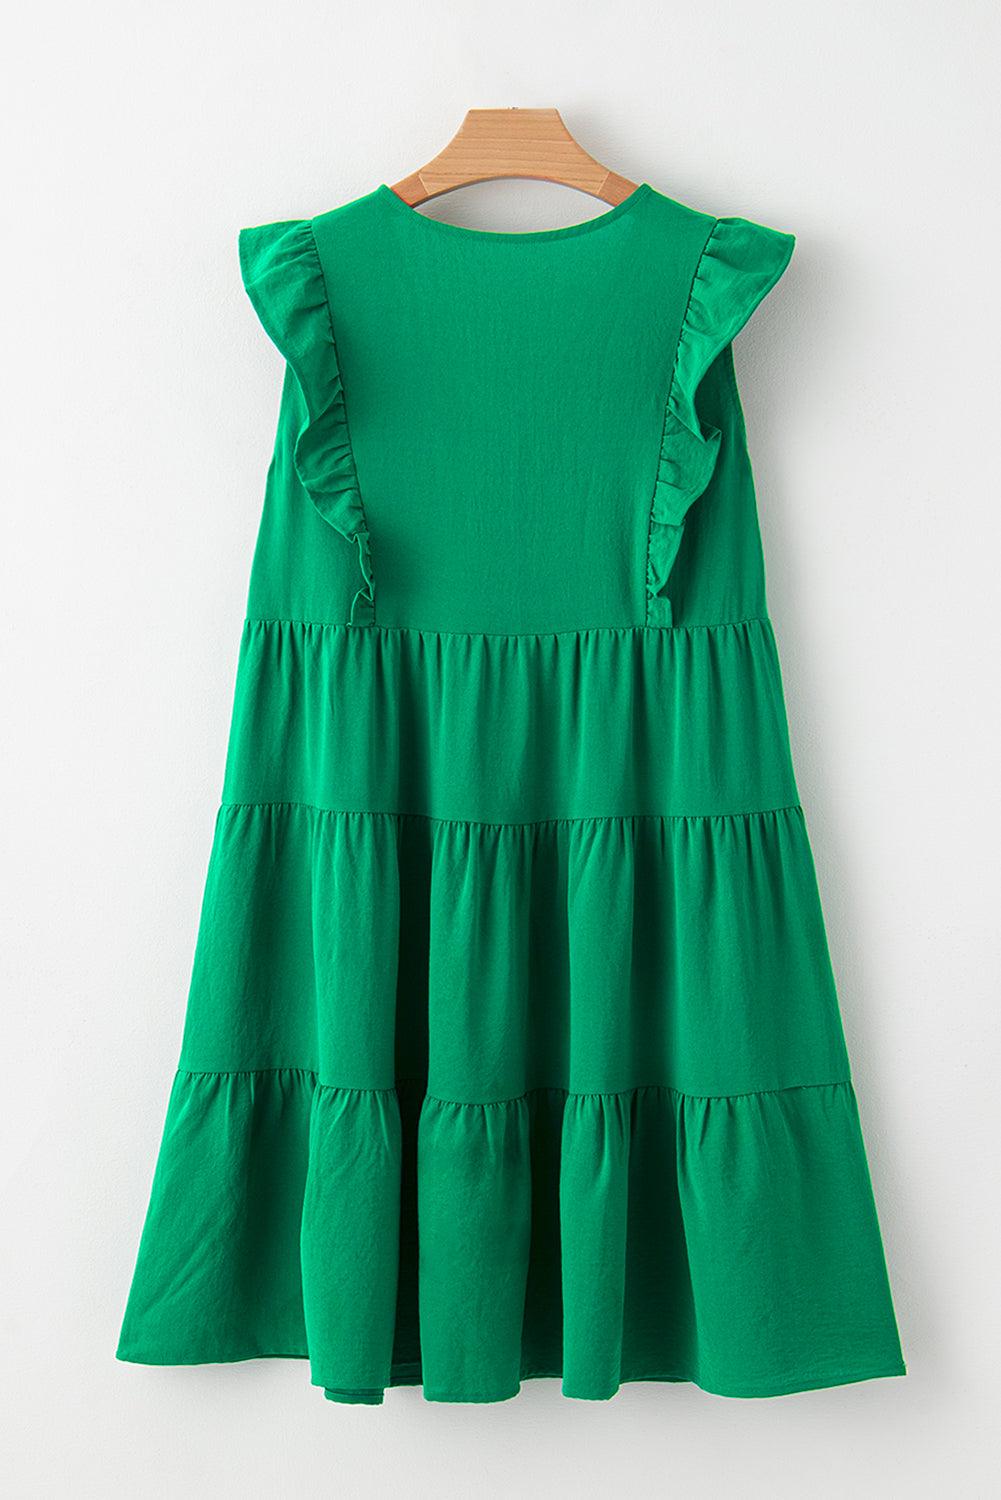 Bright Green Solid Color V Neck Ruffle Tiered Mini Dress - L & M Kee, LLC